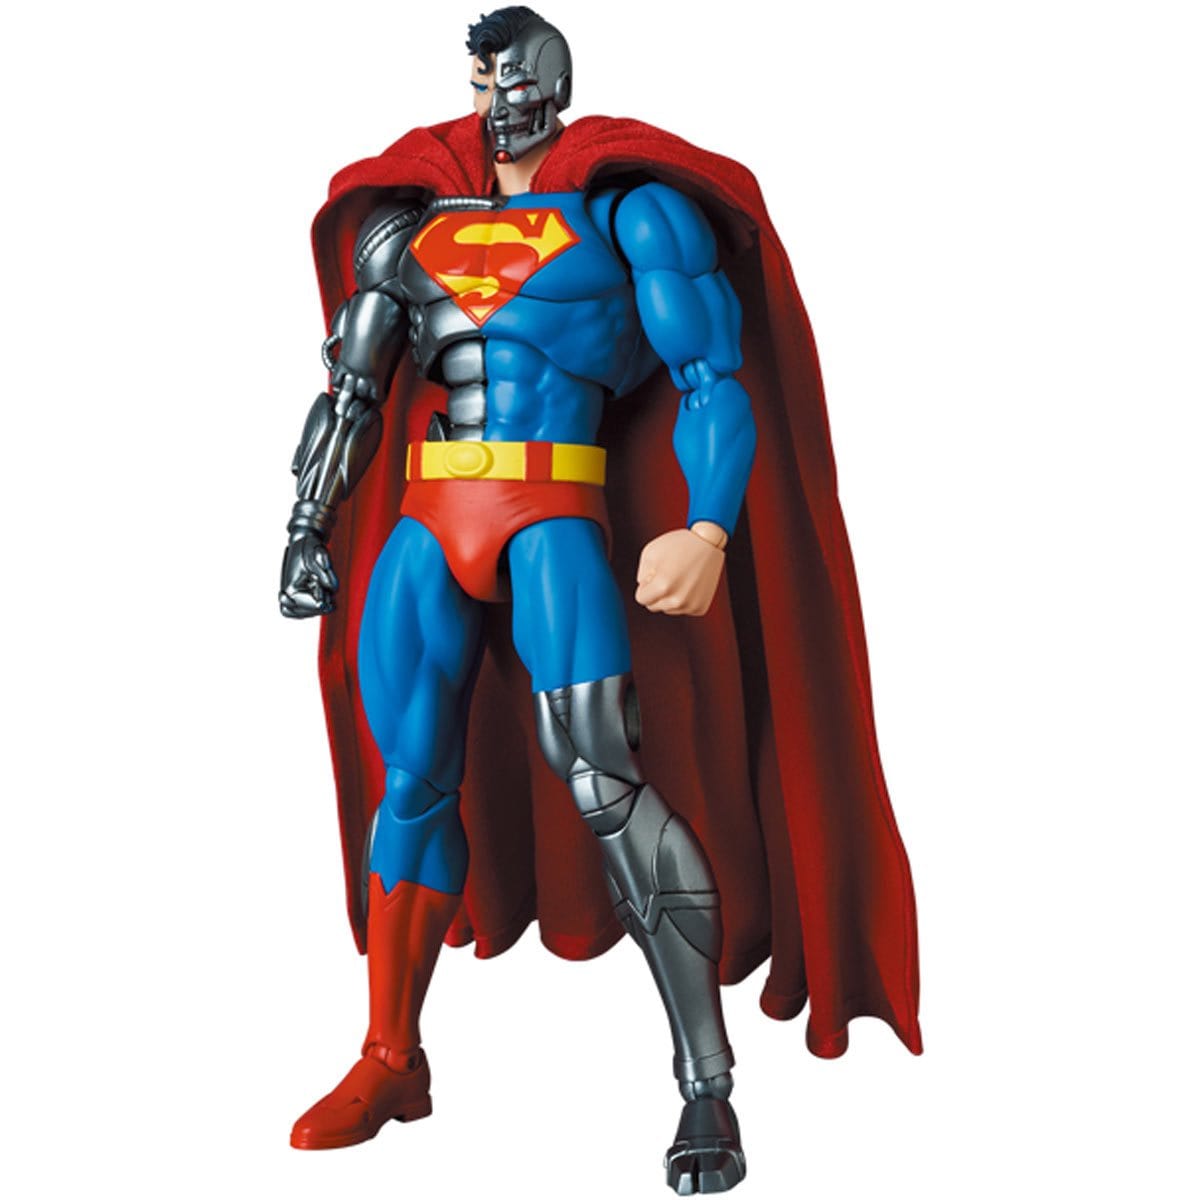 Medicom Toy MAFEX No. 164 The Return of Superman Cyborg Superman Action Figure